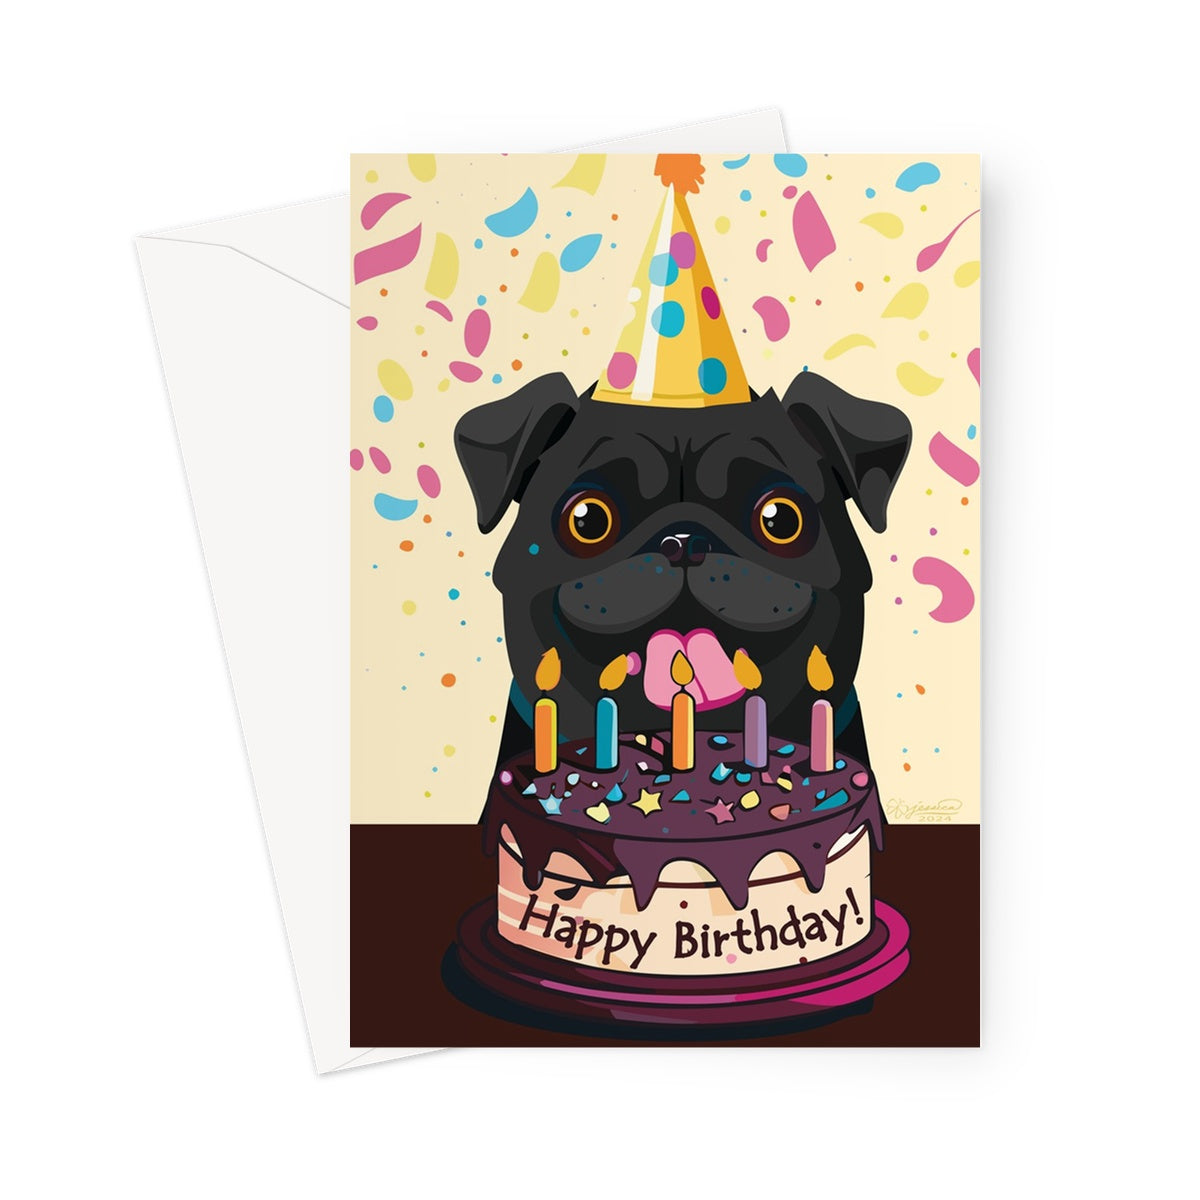 Celebrate with a Pug! Adorable Black Pug Birthday Card